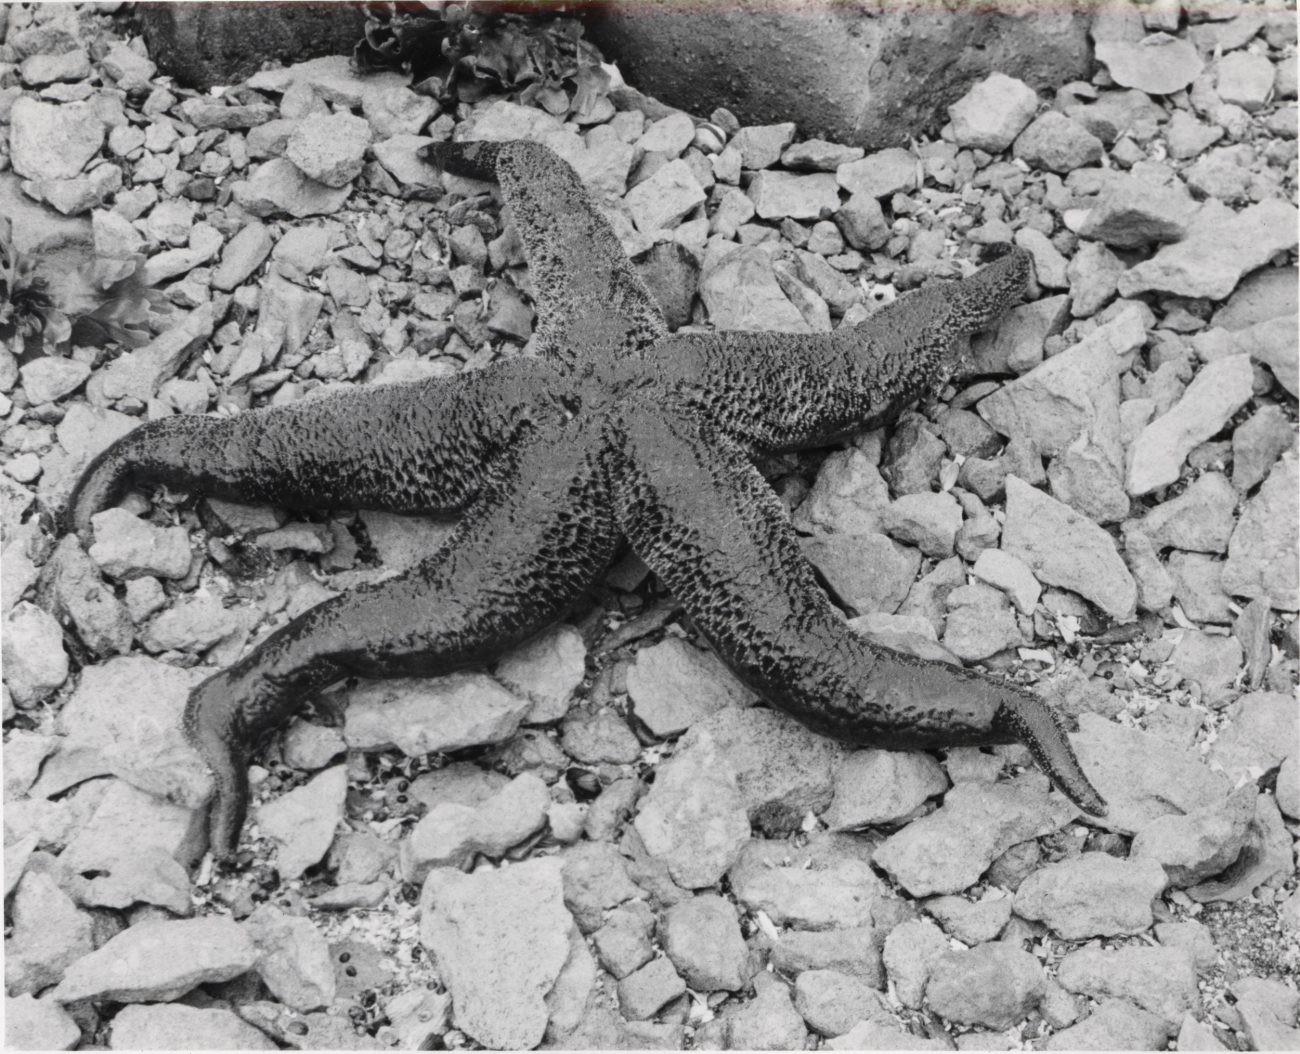 Starfish, a predator of shellfish